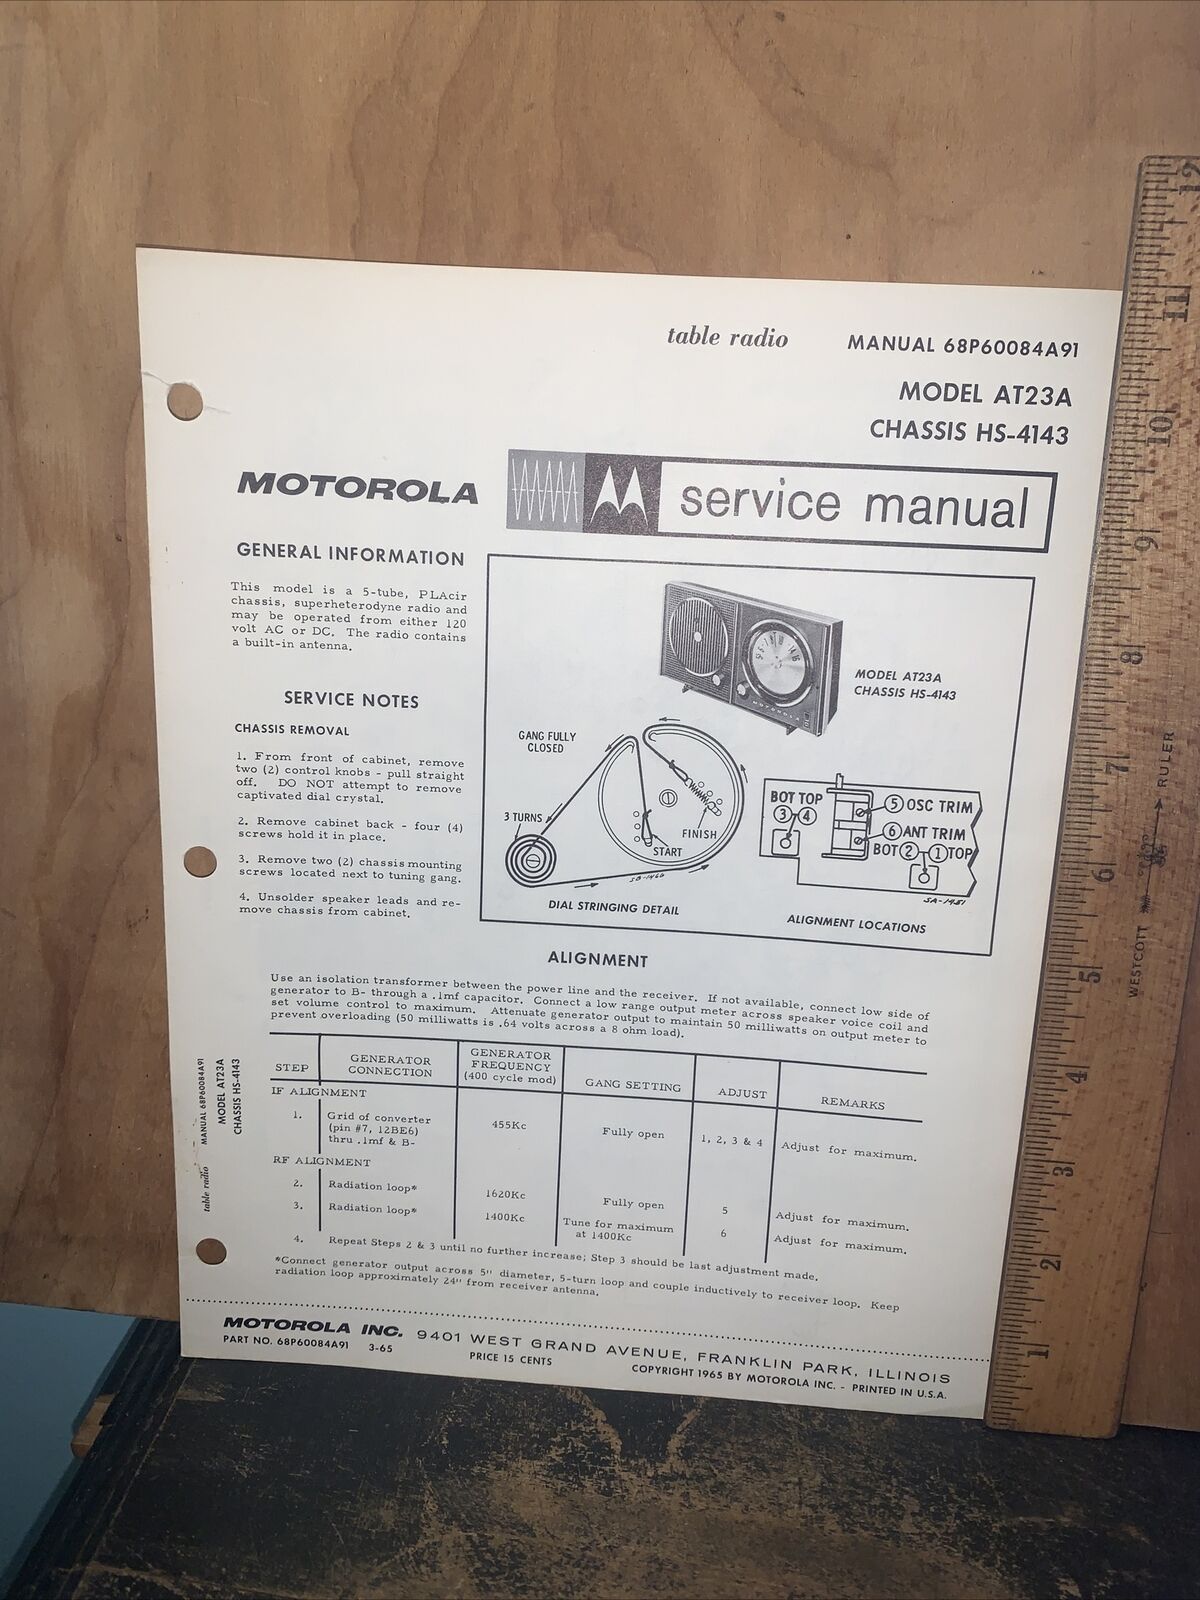 Motorola Table Radio -Service Manual- Model AT23A. Schematics,Parts List.